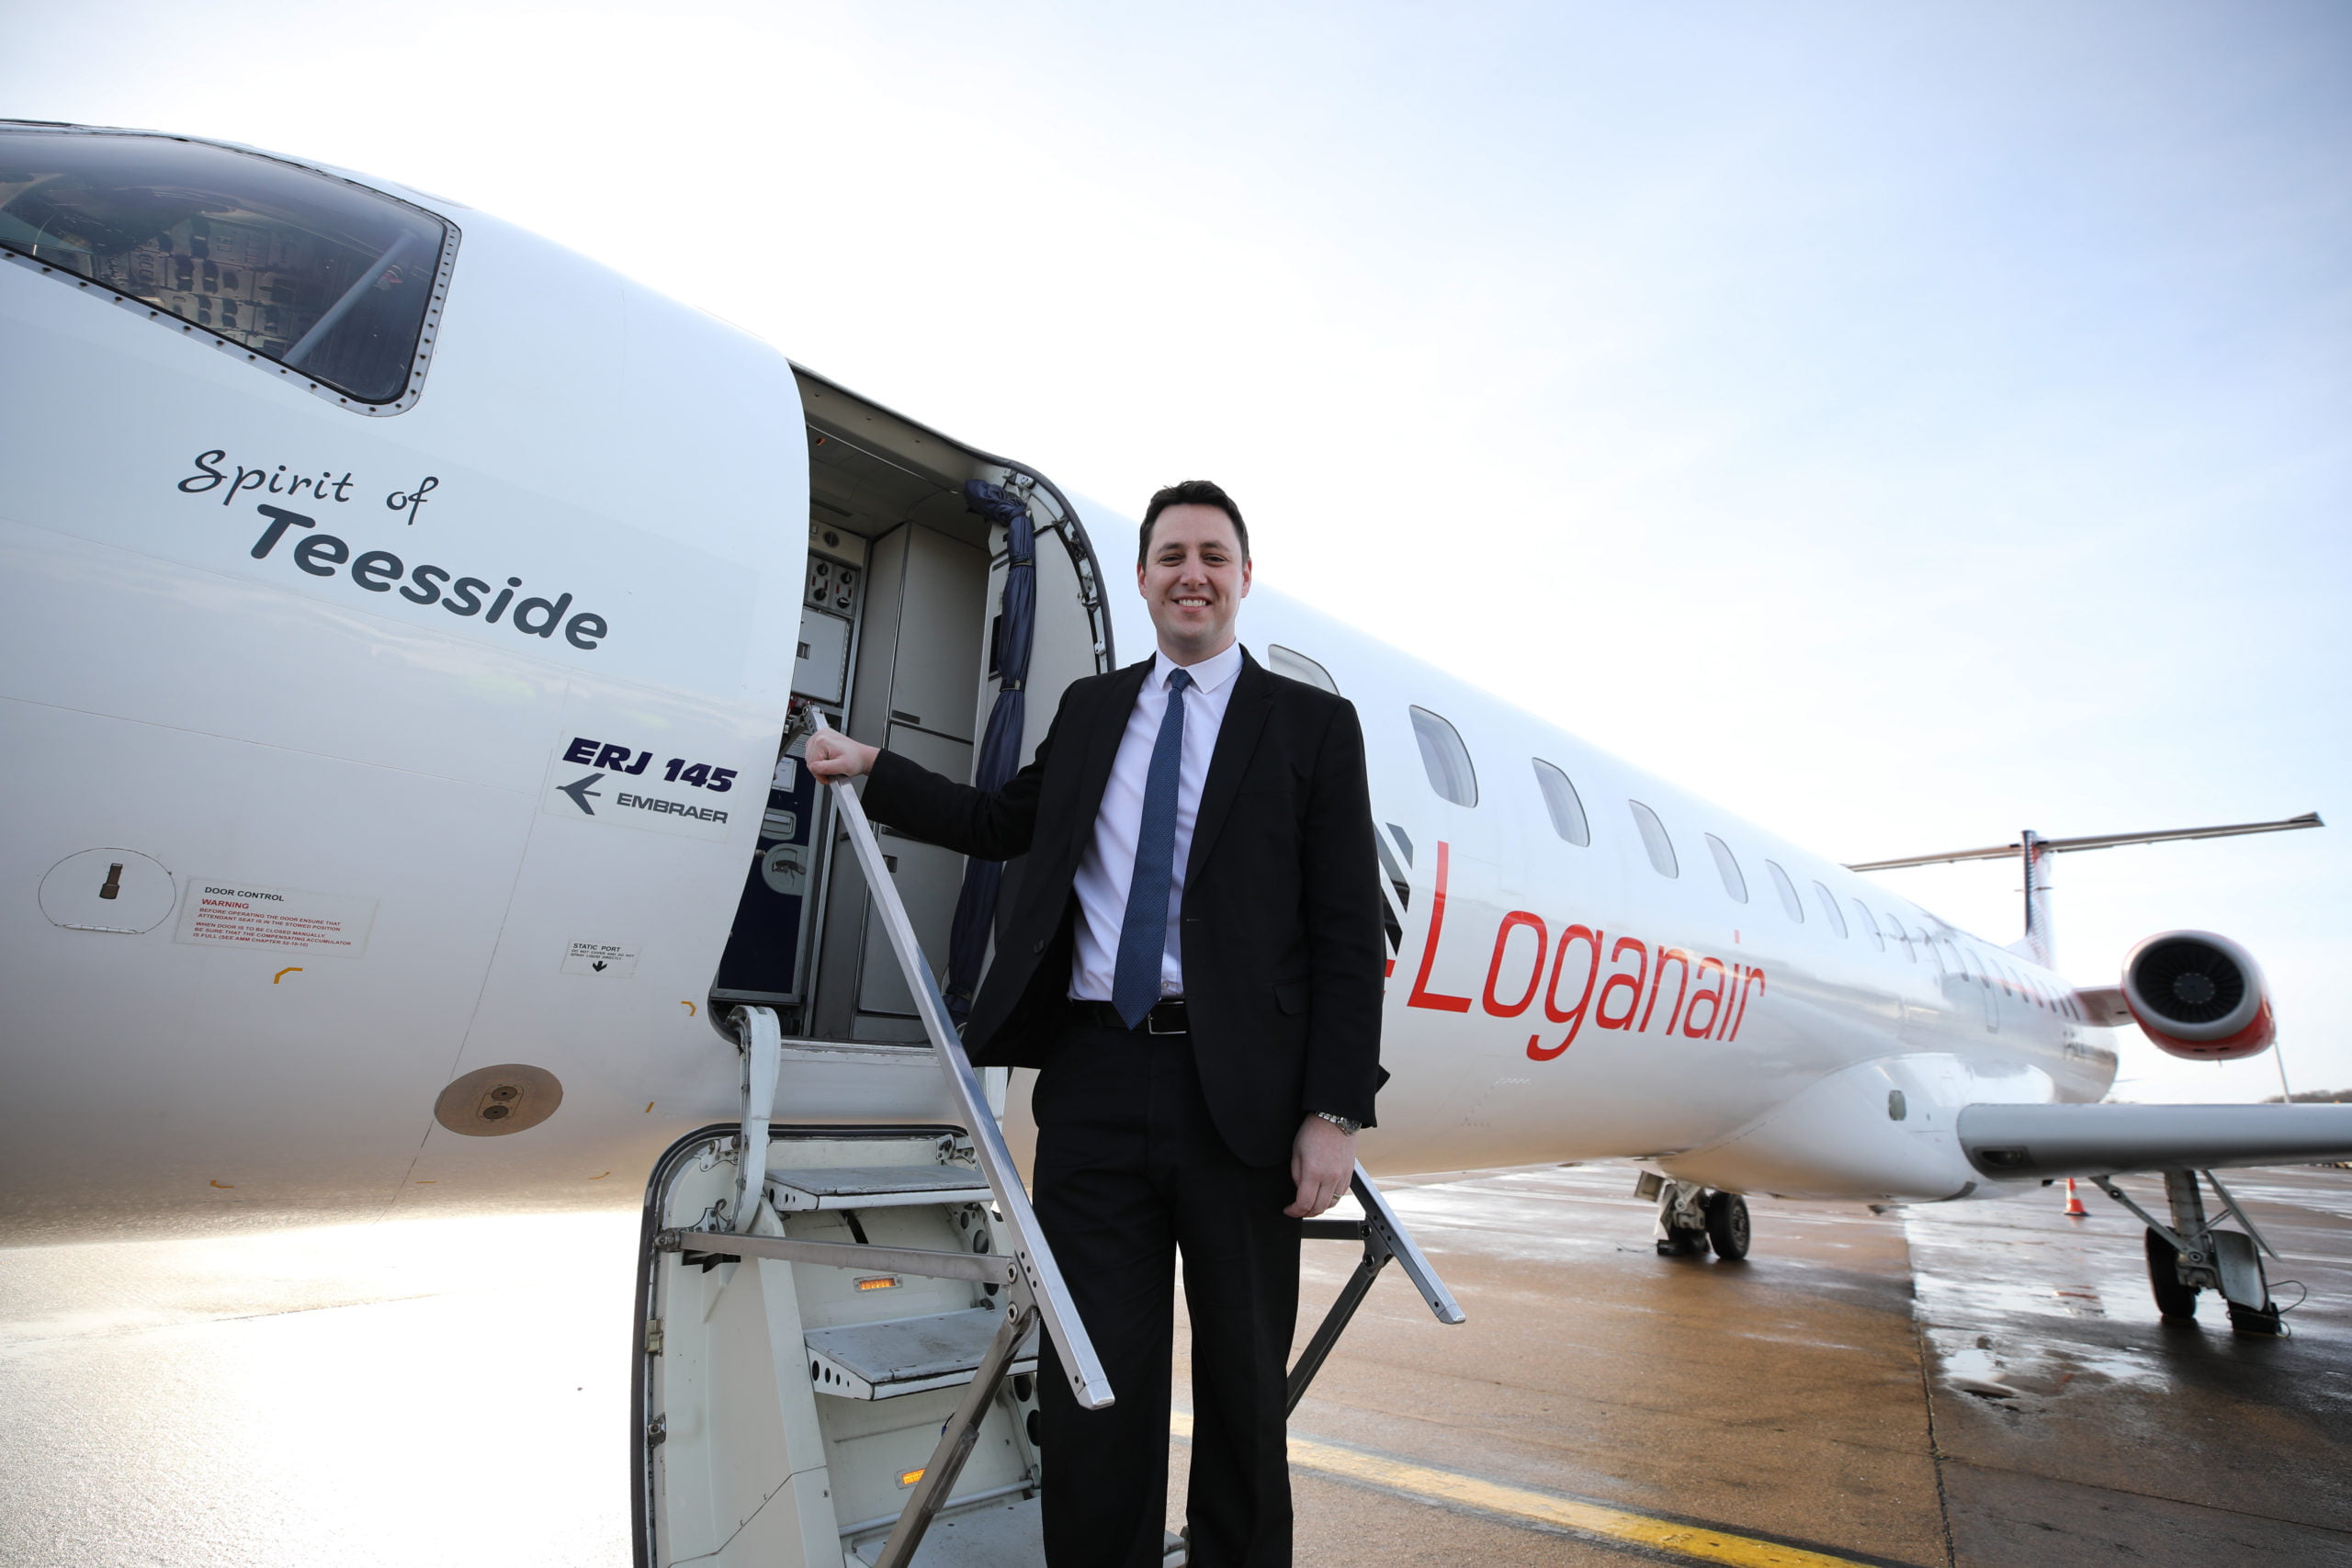 Mayor Houchen with Loganair's Spirit of Teesside Aircraft